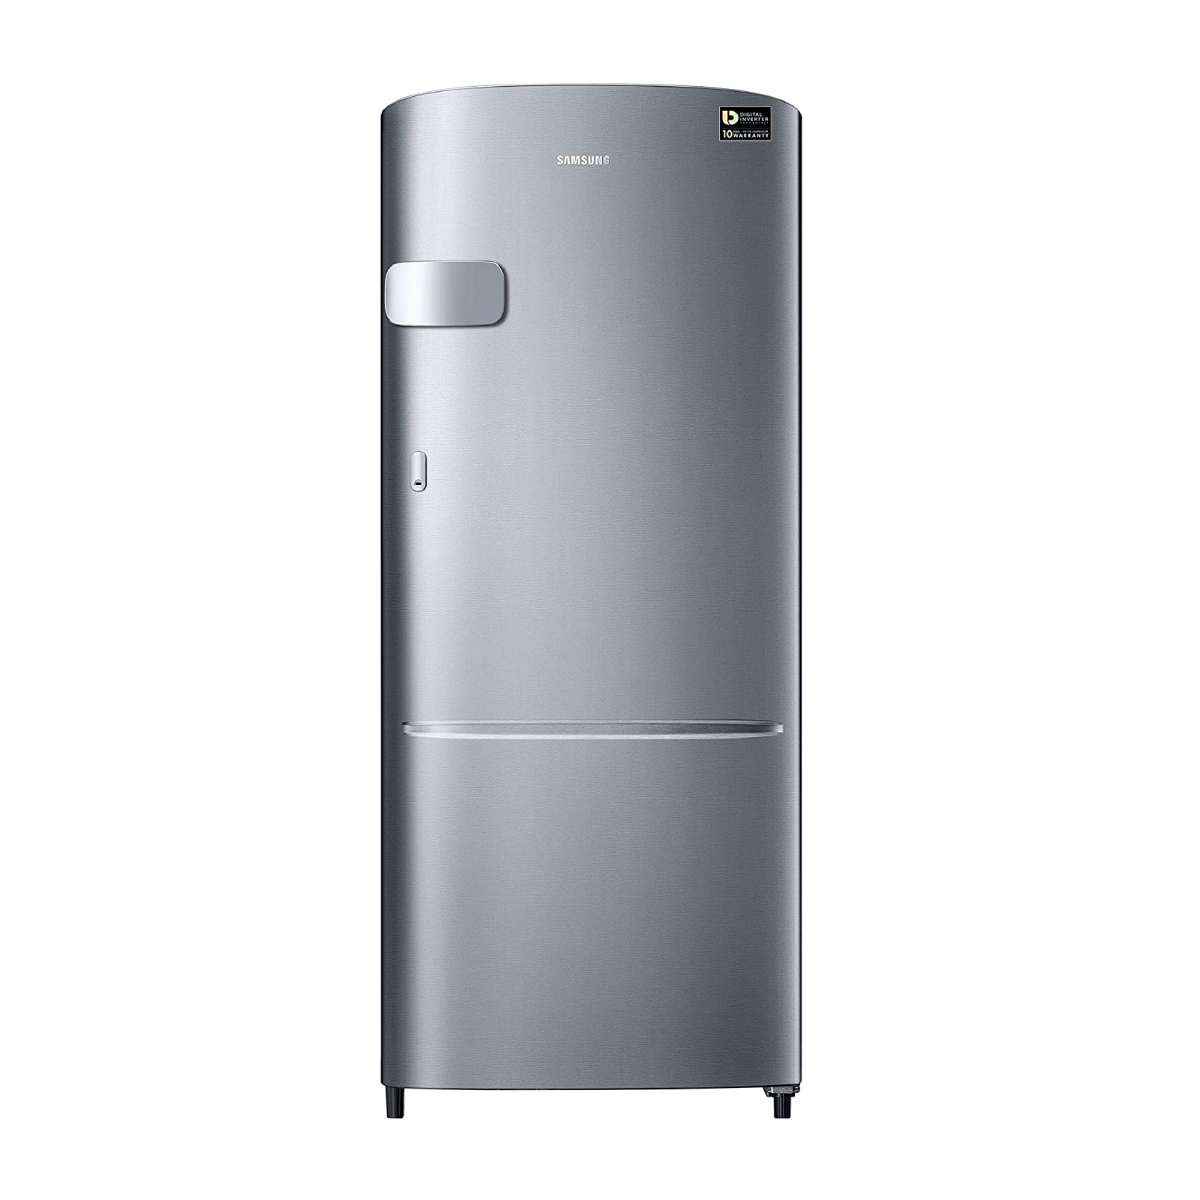 Samsung 230 L 3 Star Single Door Refrigerator (RR24A2Y2YS8/NL)